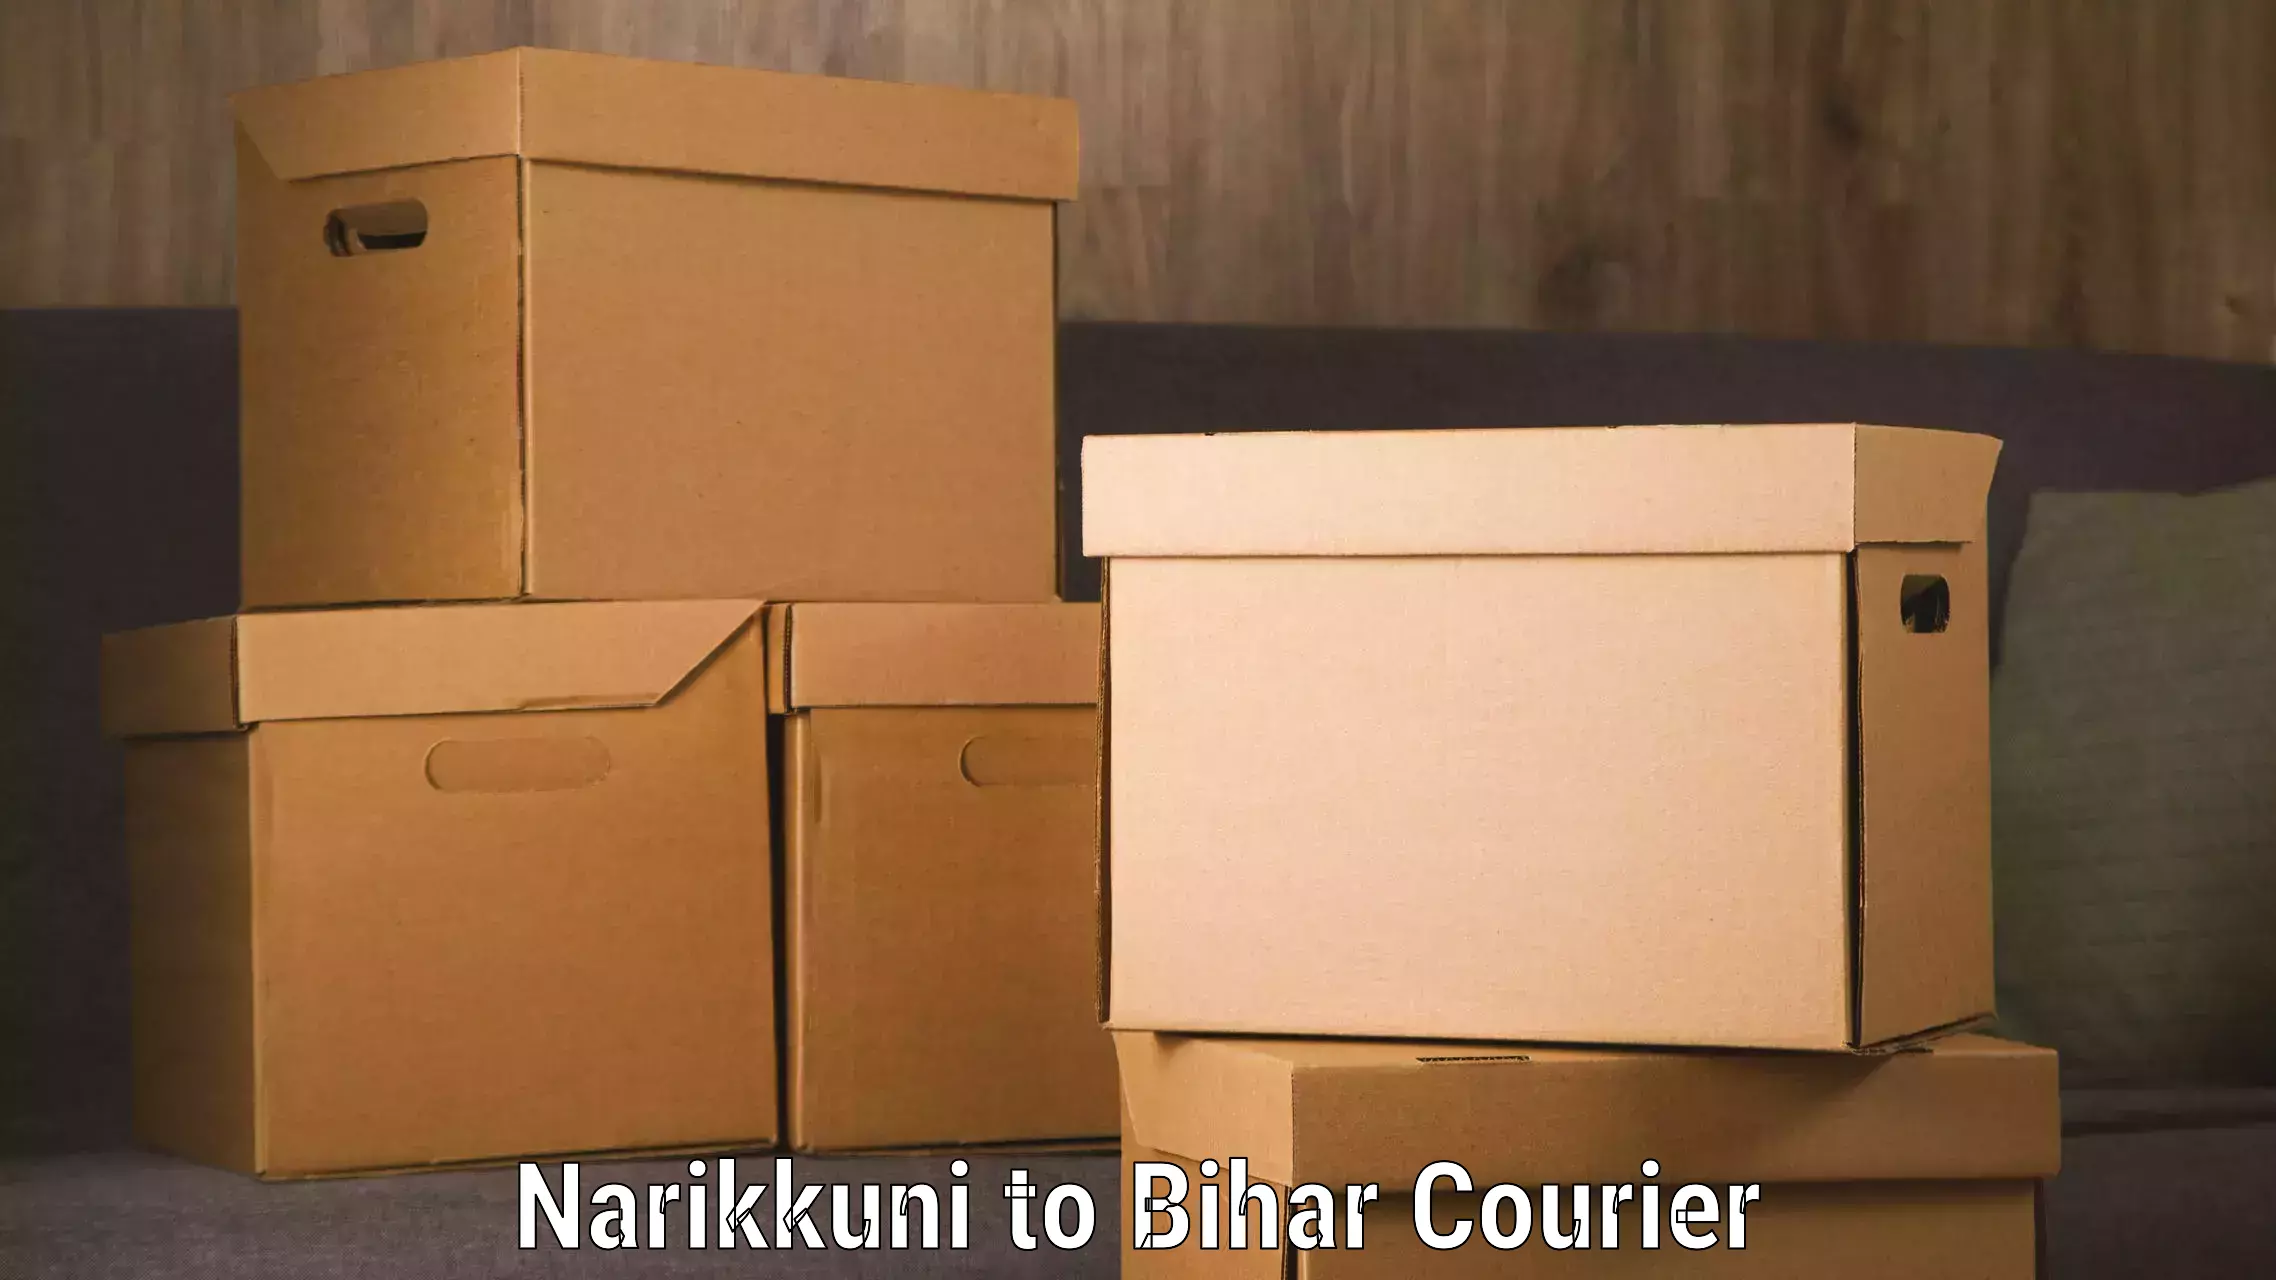 Bulk shipment in Narikkuni to Dhaka